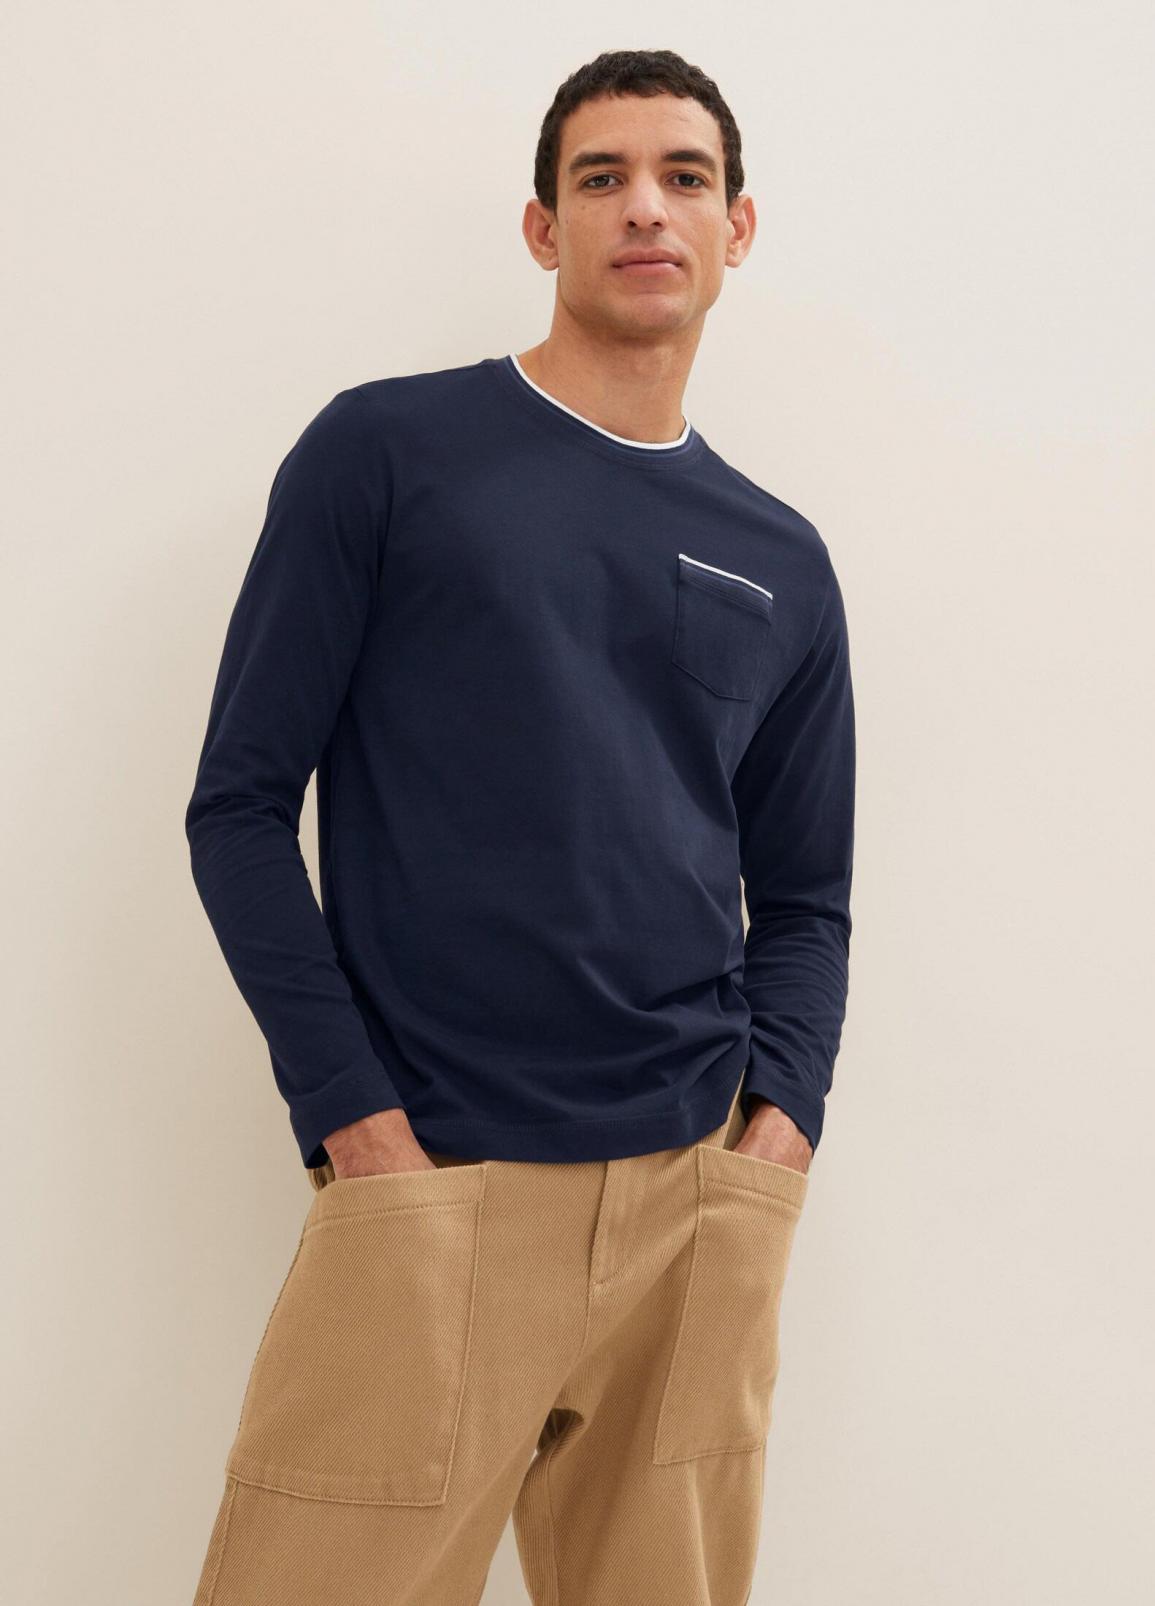 Tom Tailor® Long Sleeve One Pocket Sweatshirt - Sky Captain